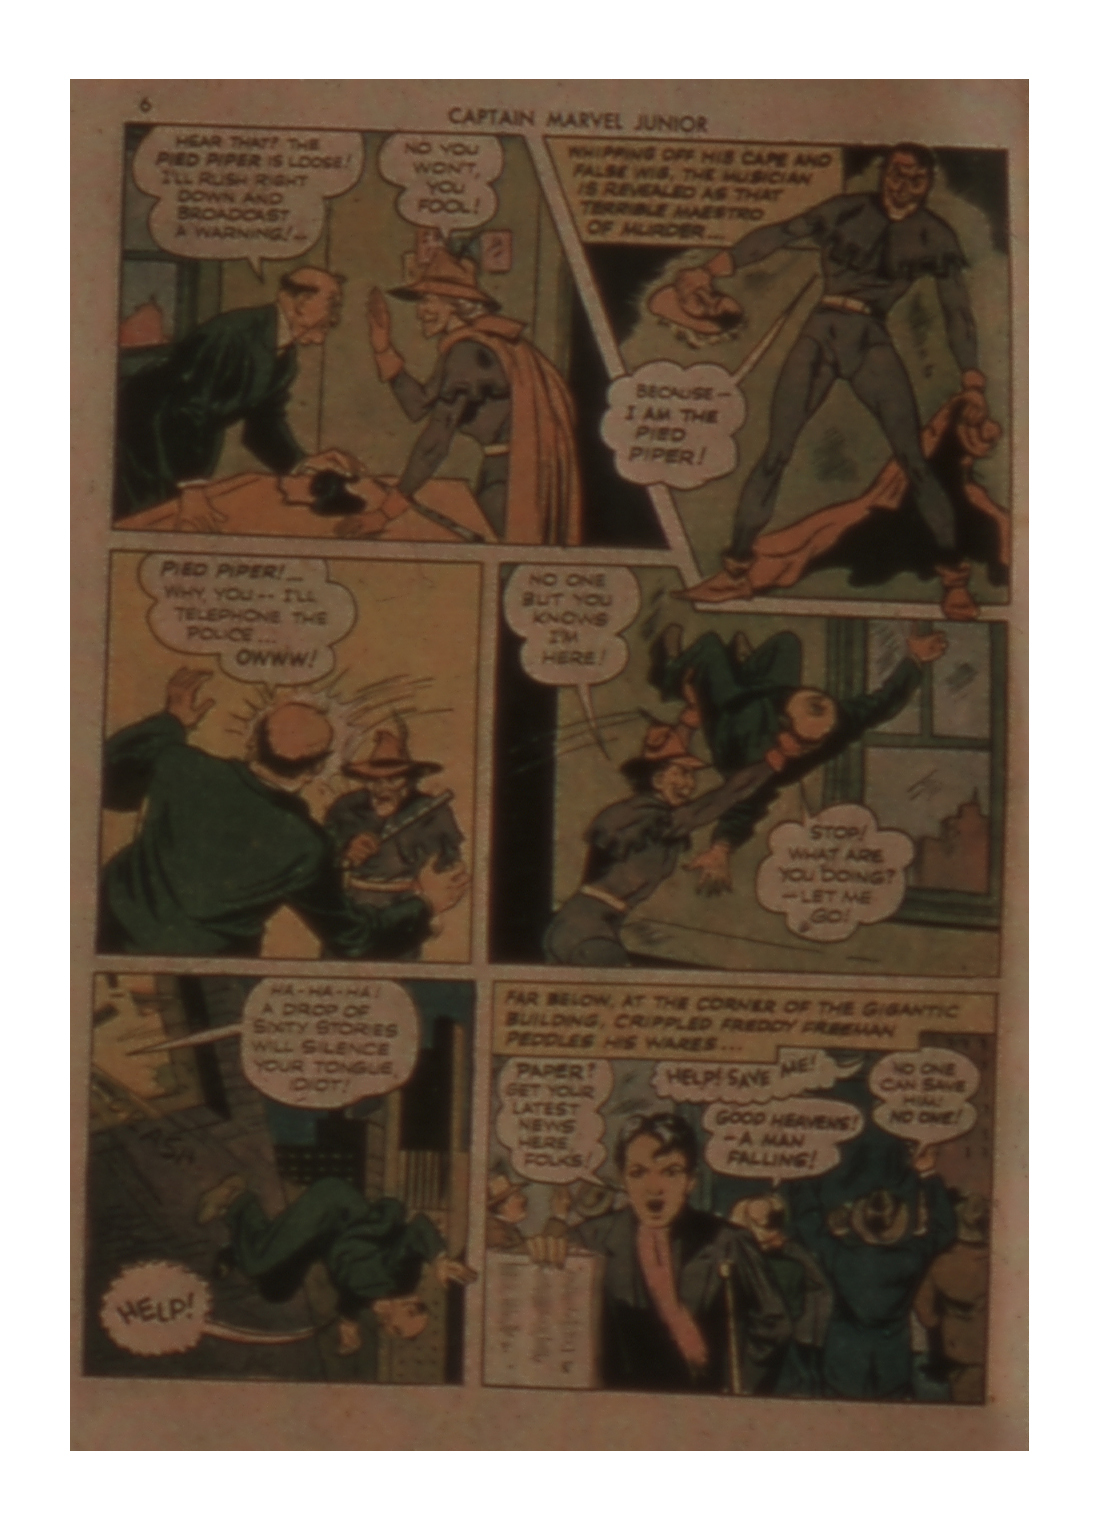 Read online Captain Marvel, Jr. comic -  Issue #3 - 6